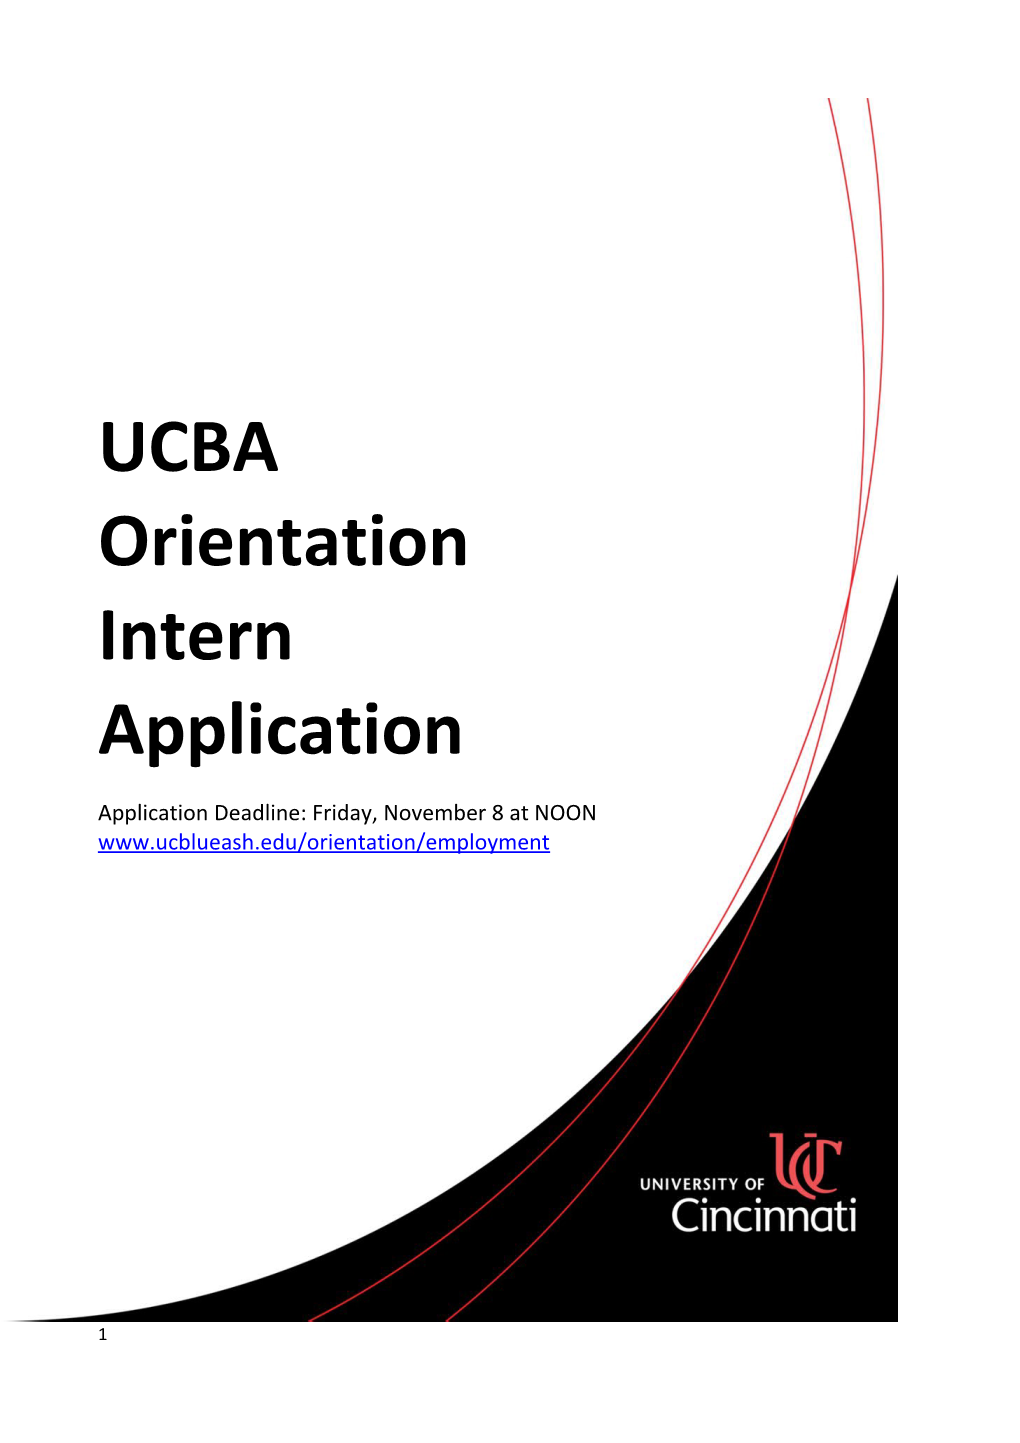 UCBA Orientation Intern Position